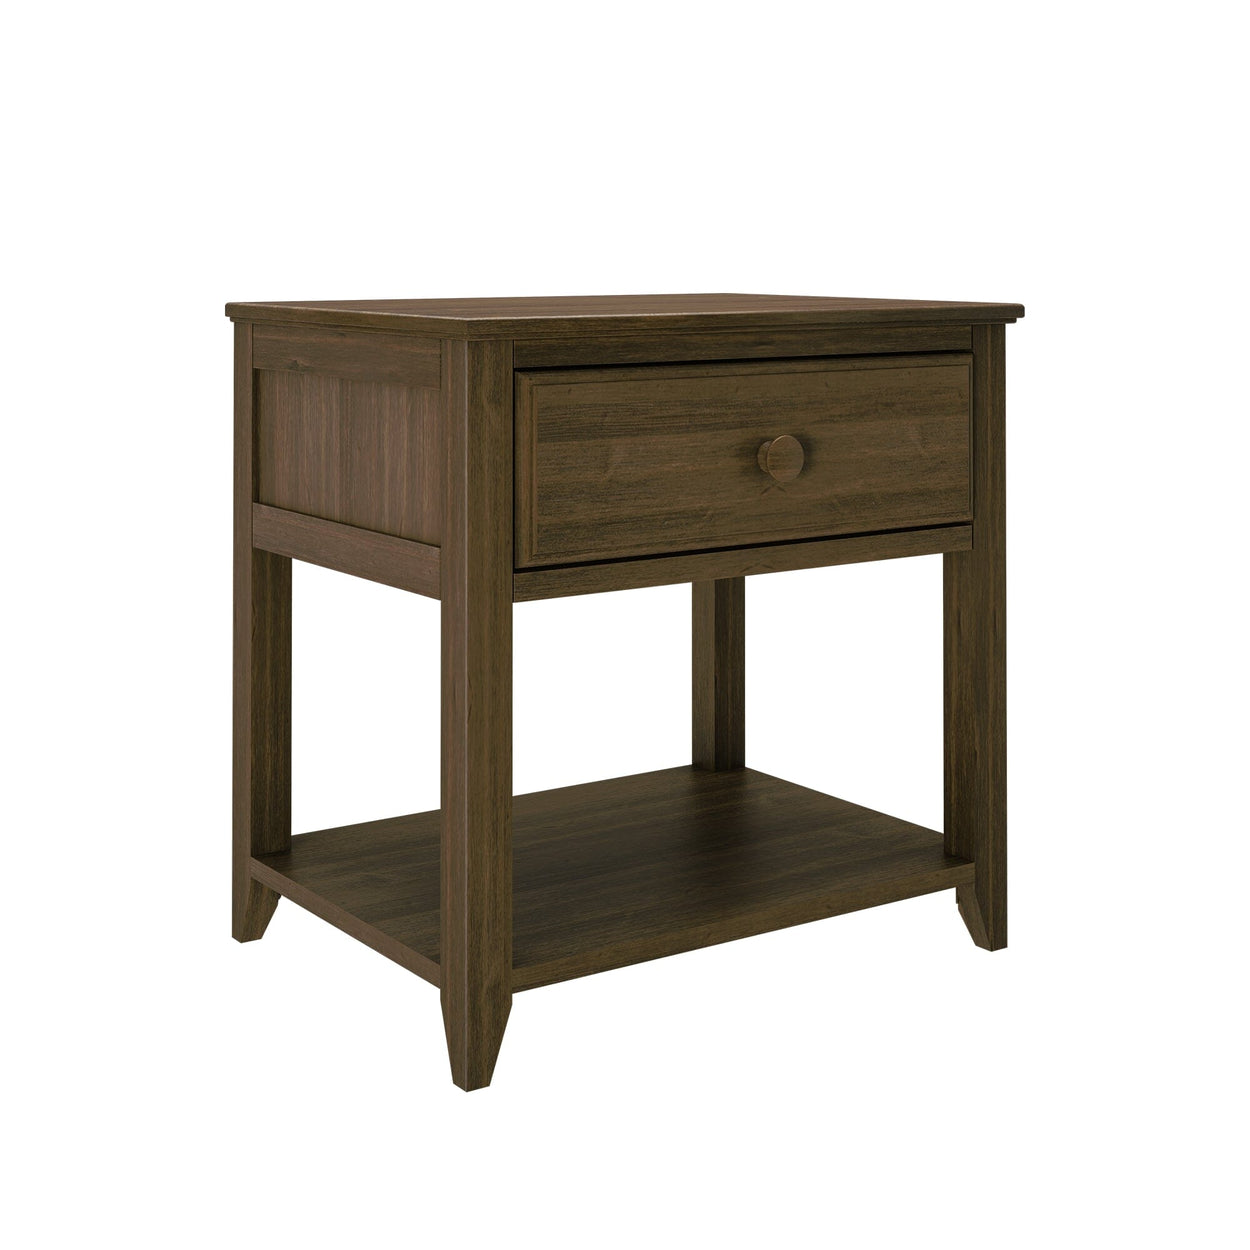 180001-008 : Furniture Nightstand with Drawer and Shelf, Walnut